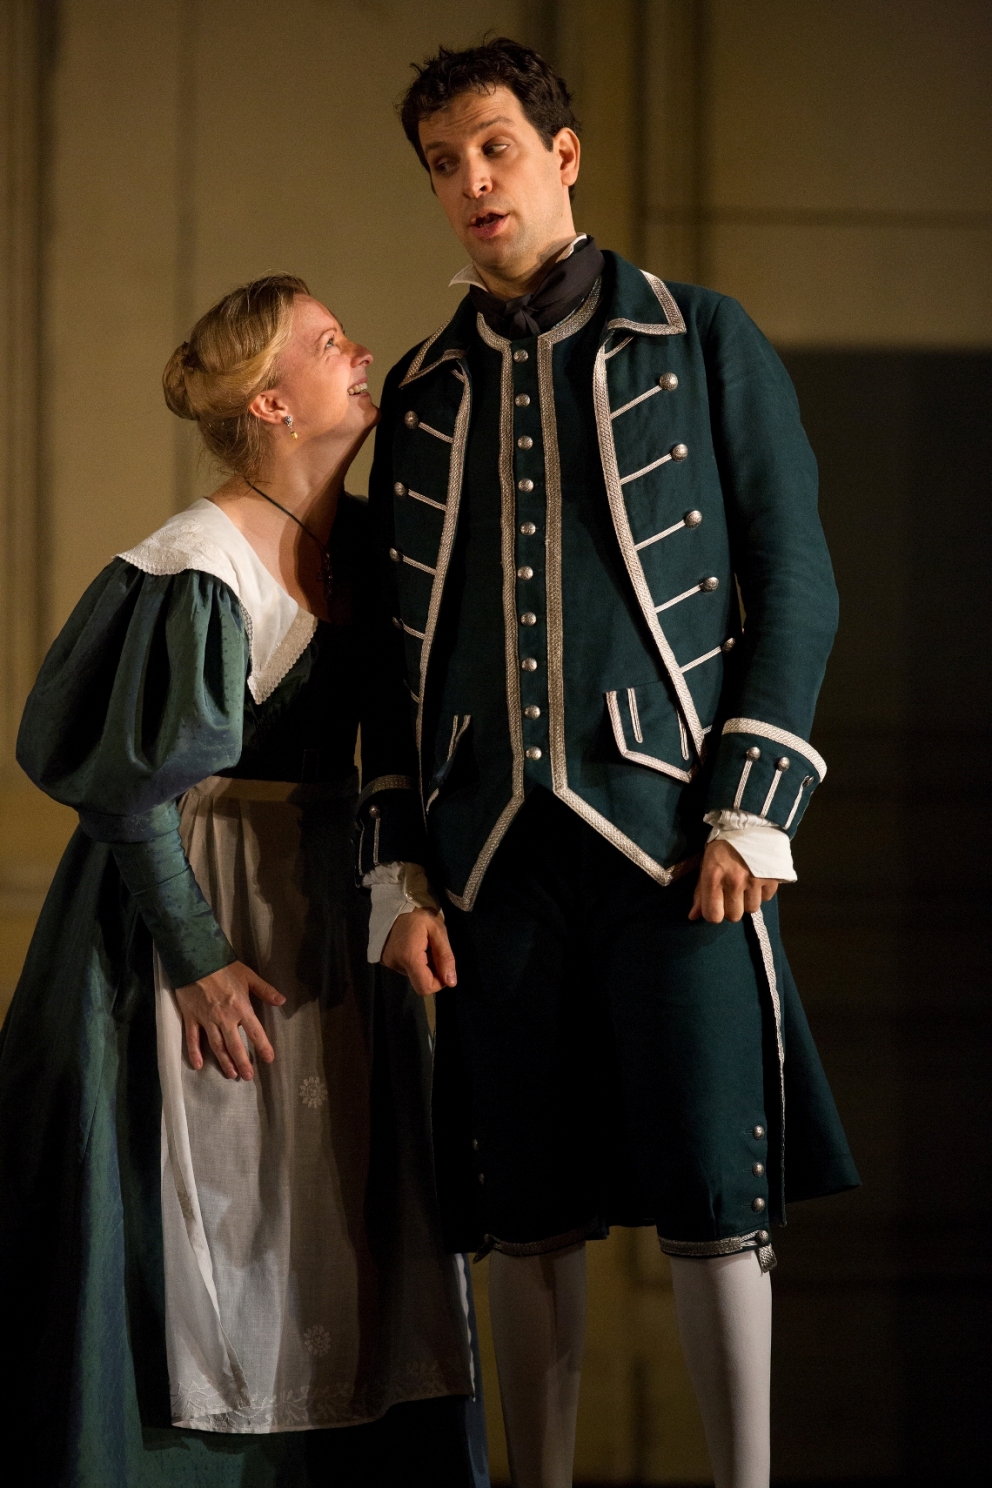 Lucy Crowe and Luca Pisaroni in the Royal Opera Figaro